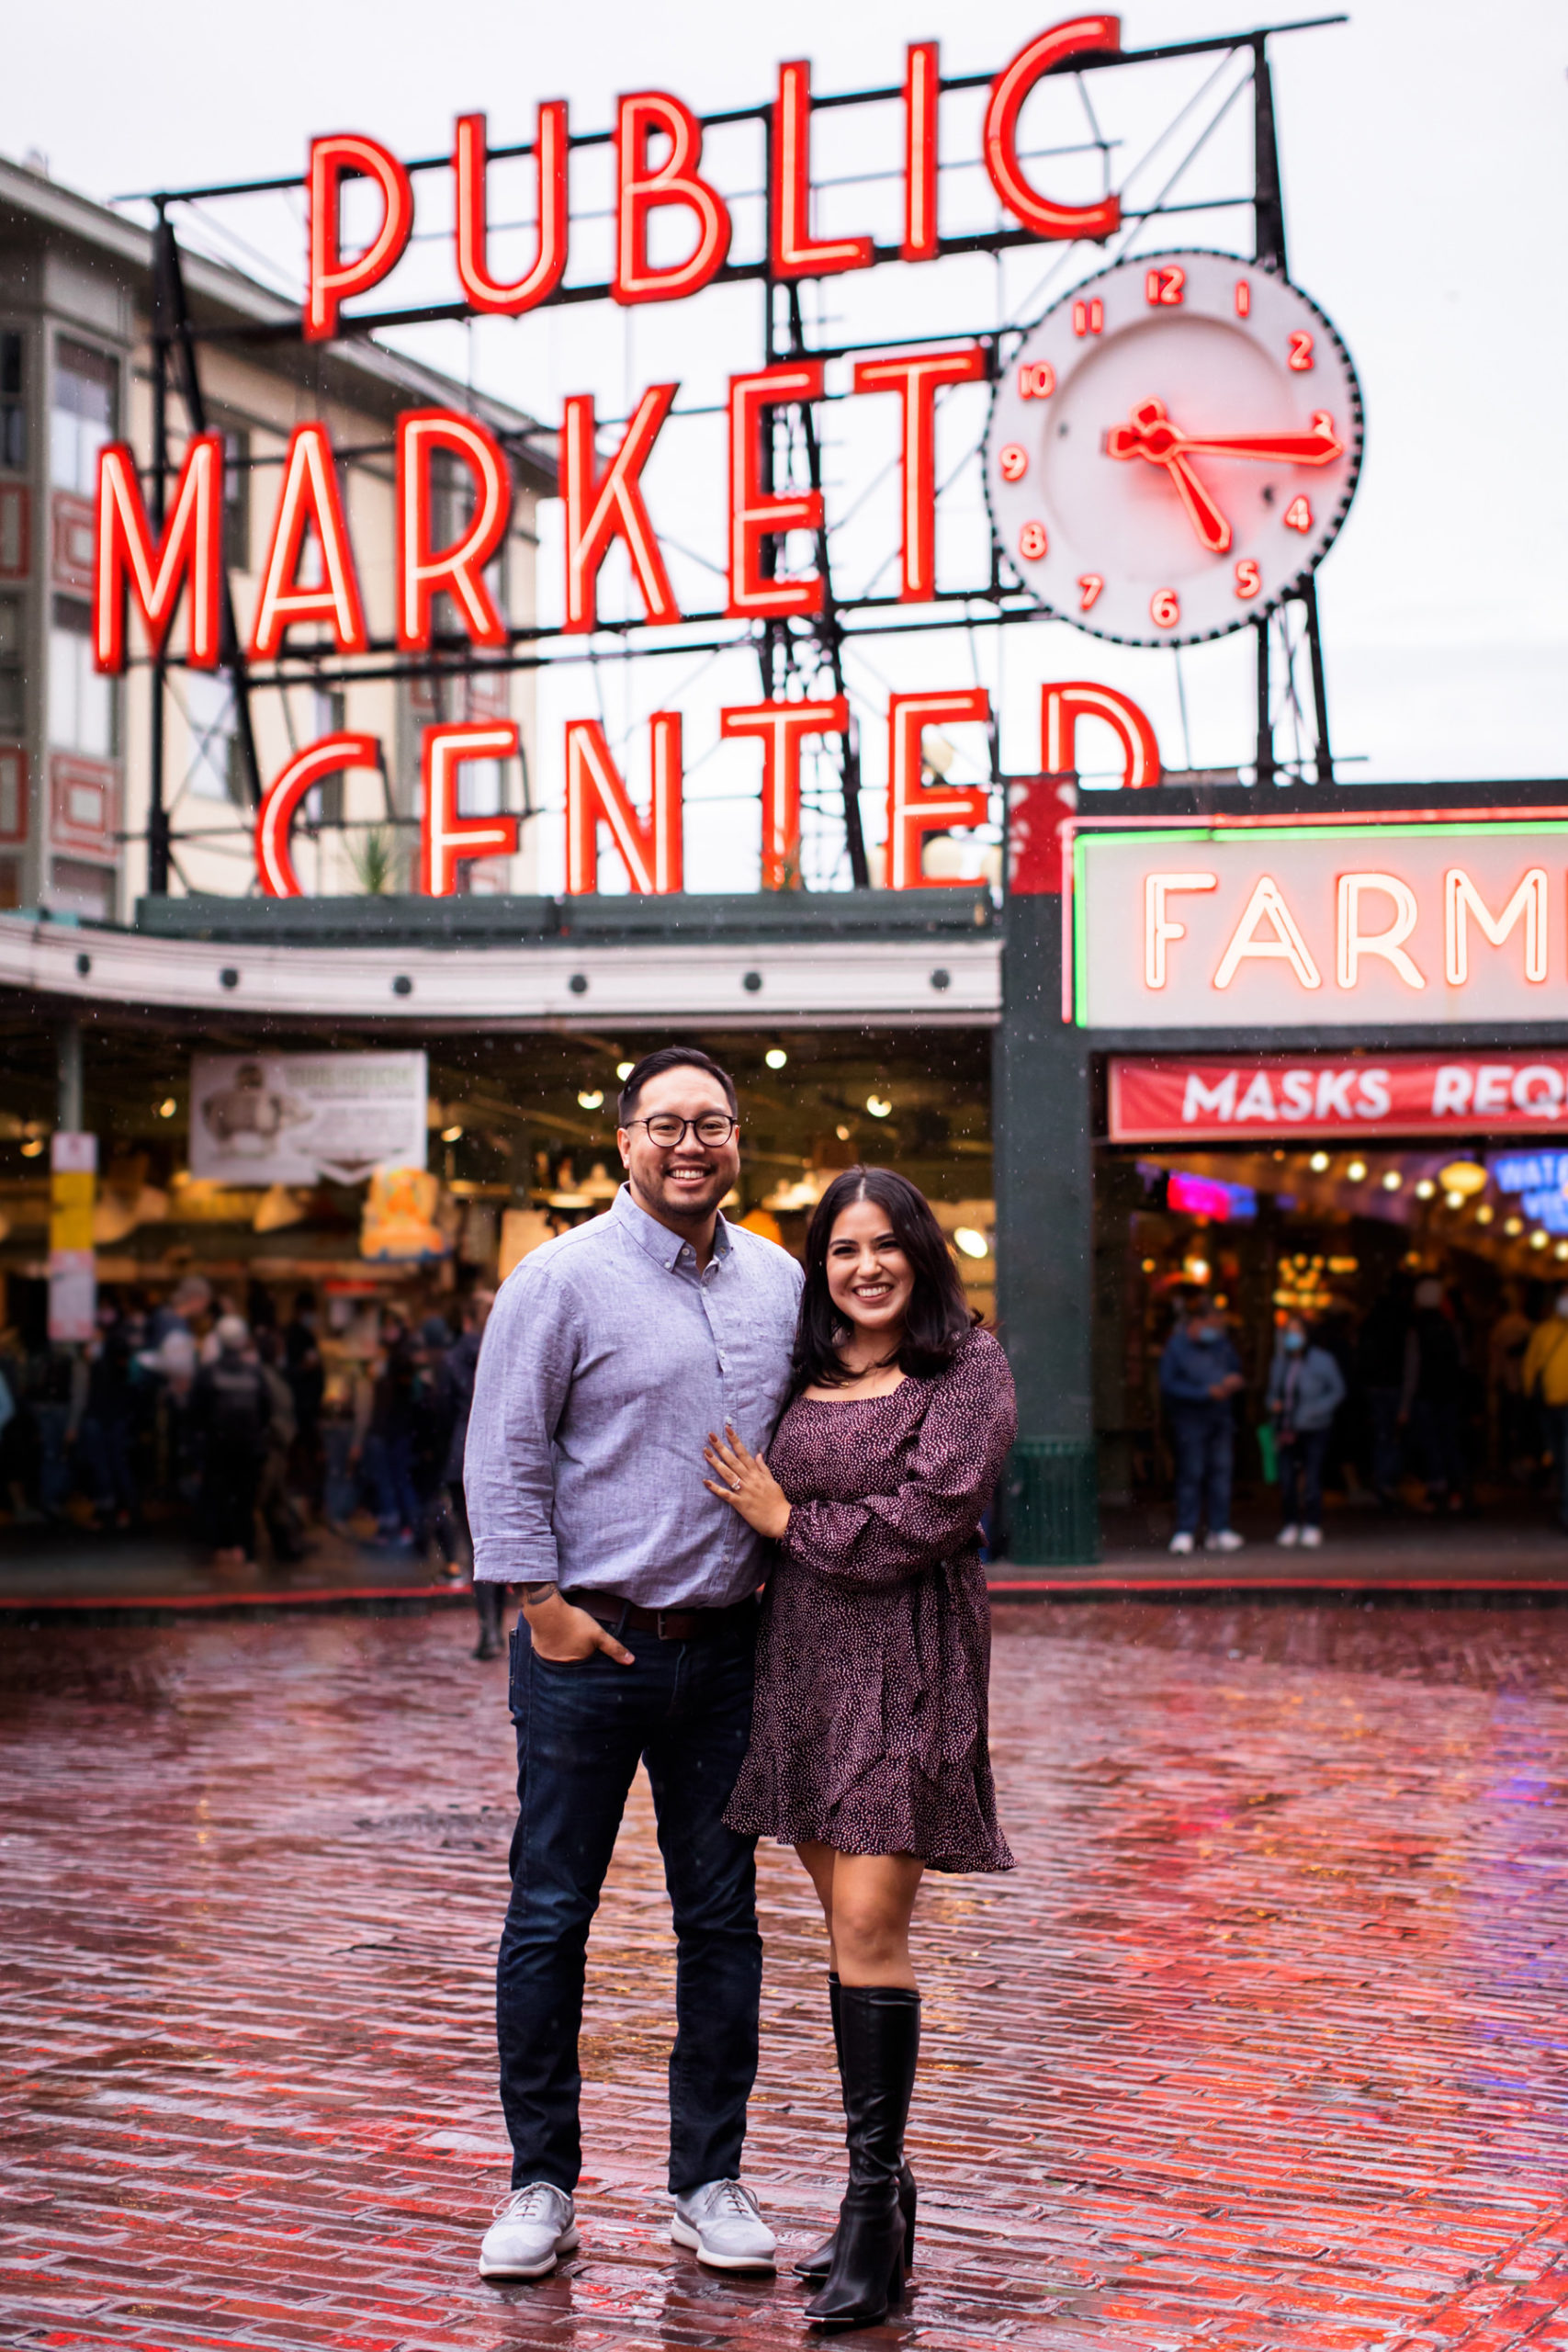 Seattle Surprise Proposal Photos